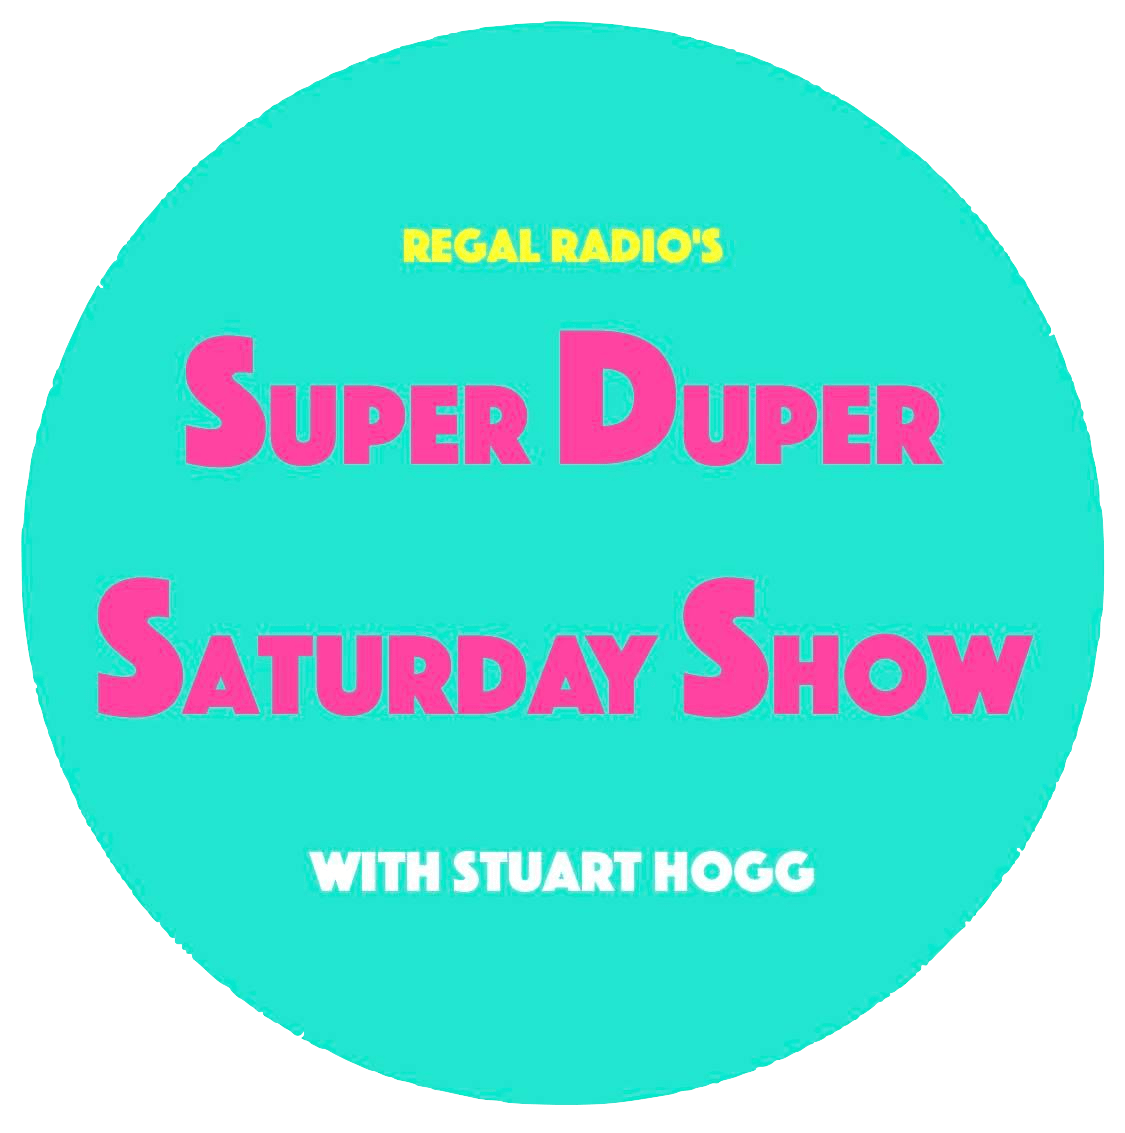 Regal Radio's Super Duper Saturday Show with Stuart Hogg